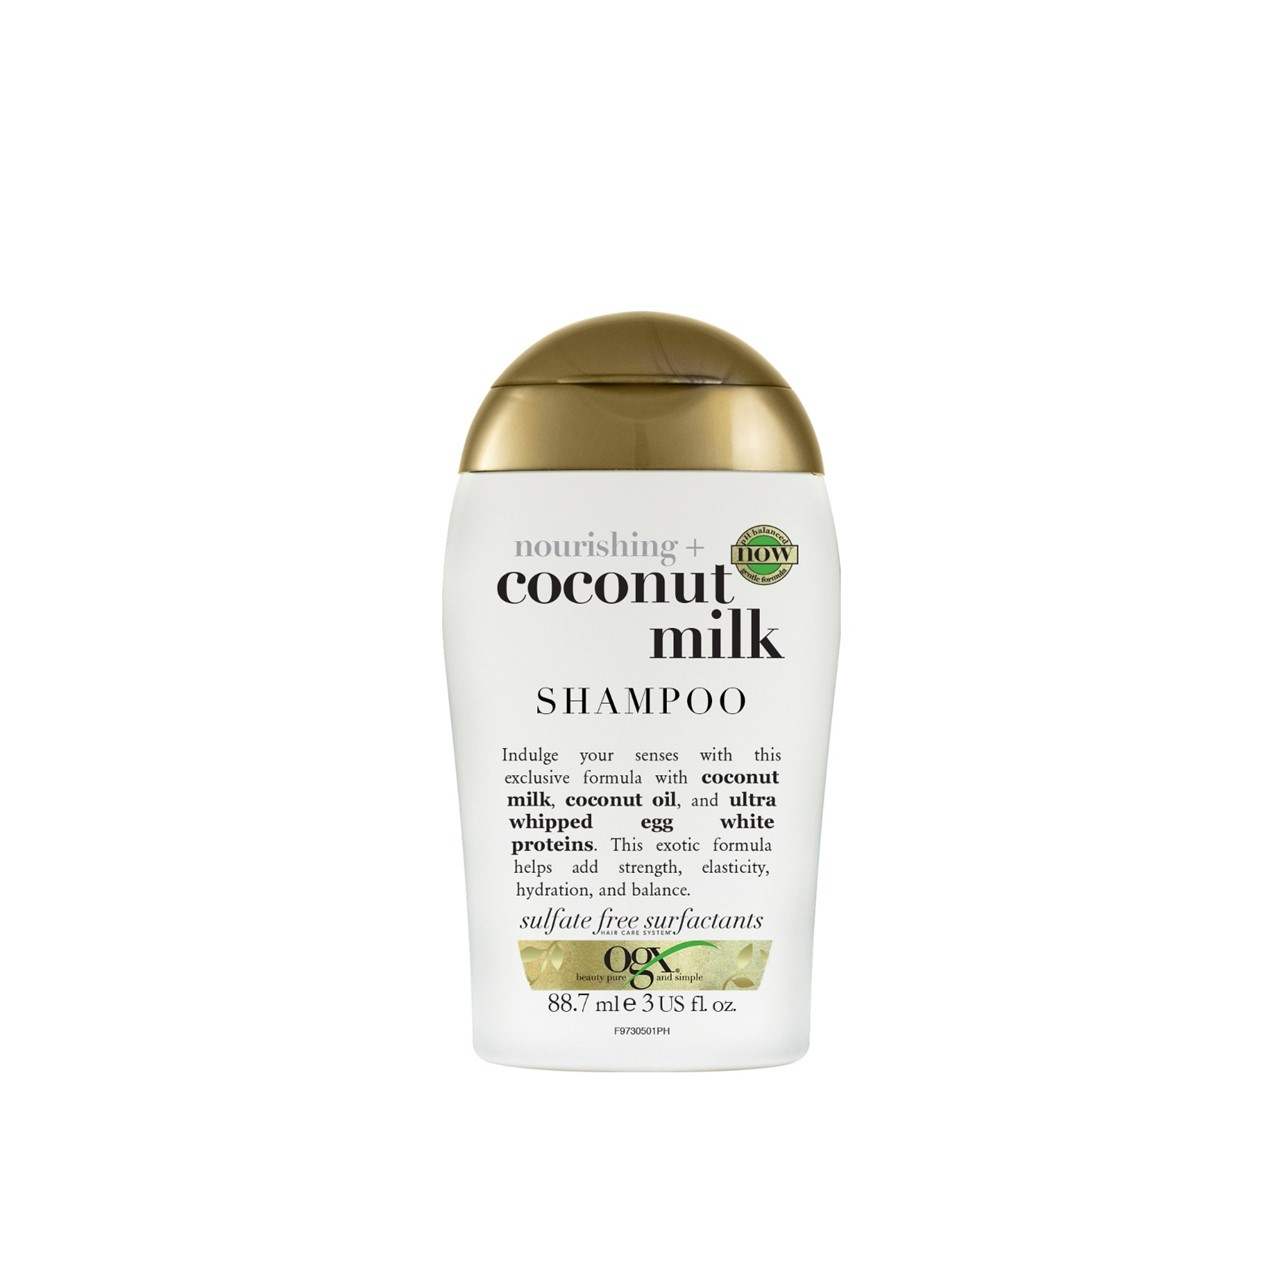 https://static.beautytocare.com/media/catalog/product/o/g/ogx-nourishing-coconut-milk-shampoo-88-7ml.jpg